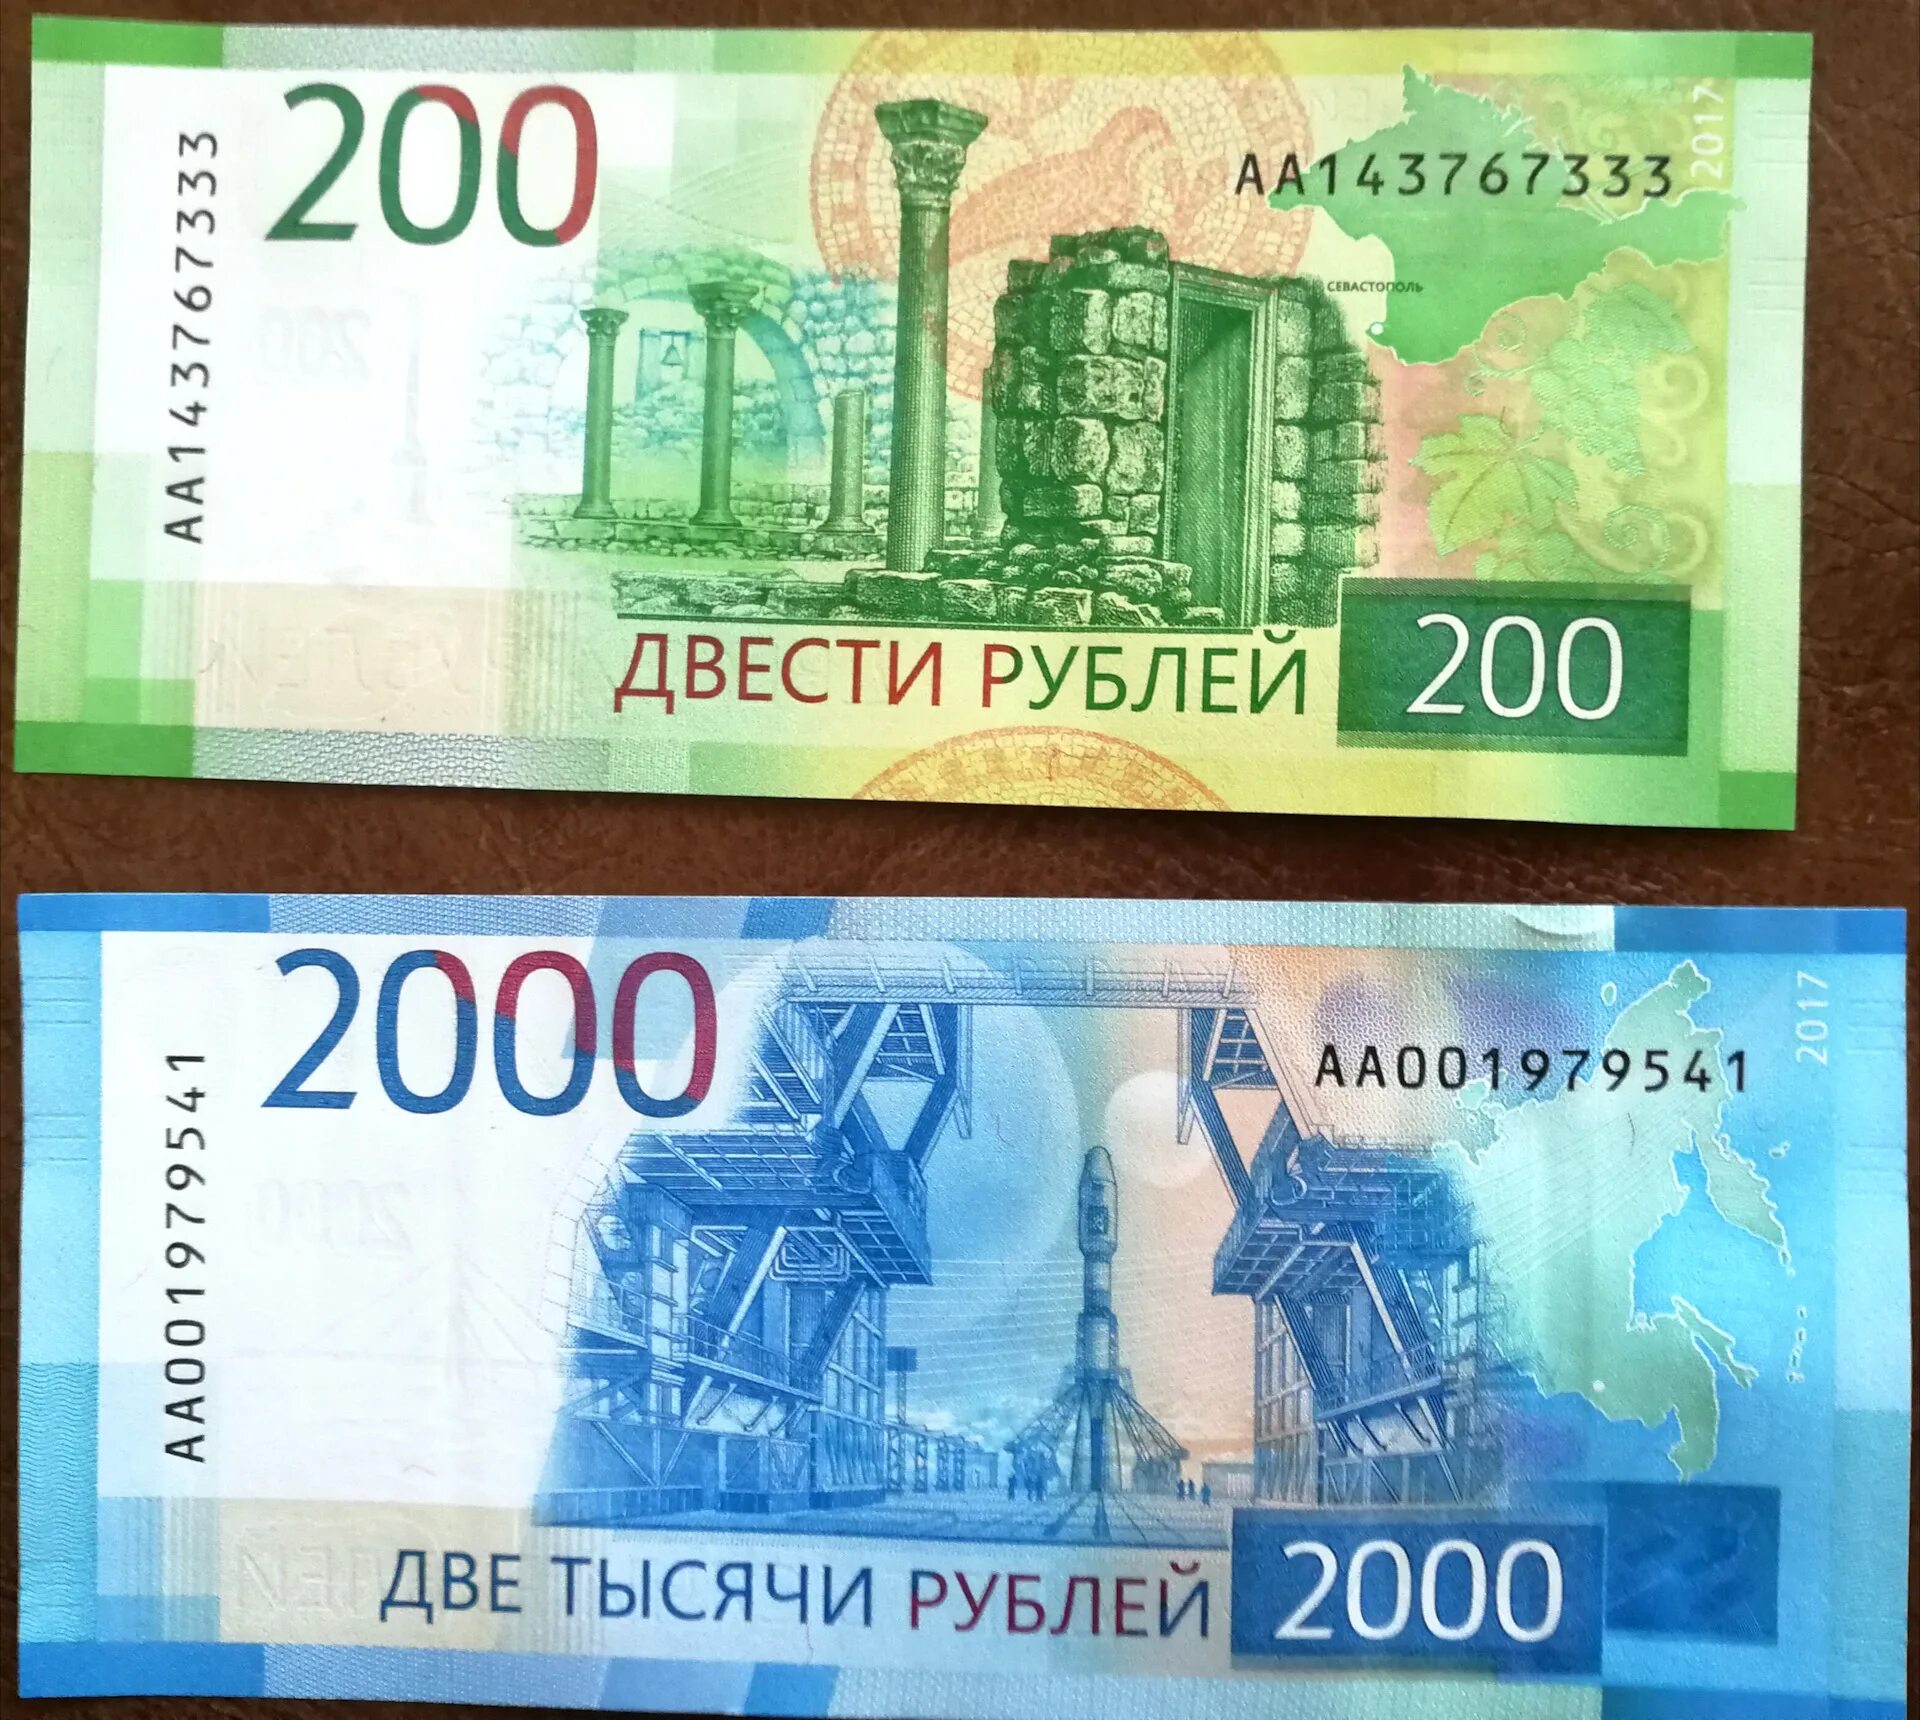 200 Рублей с двух сторон. Номер на 200 рублей. 100 200 2000 Рублей. Картина 200 рублей.